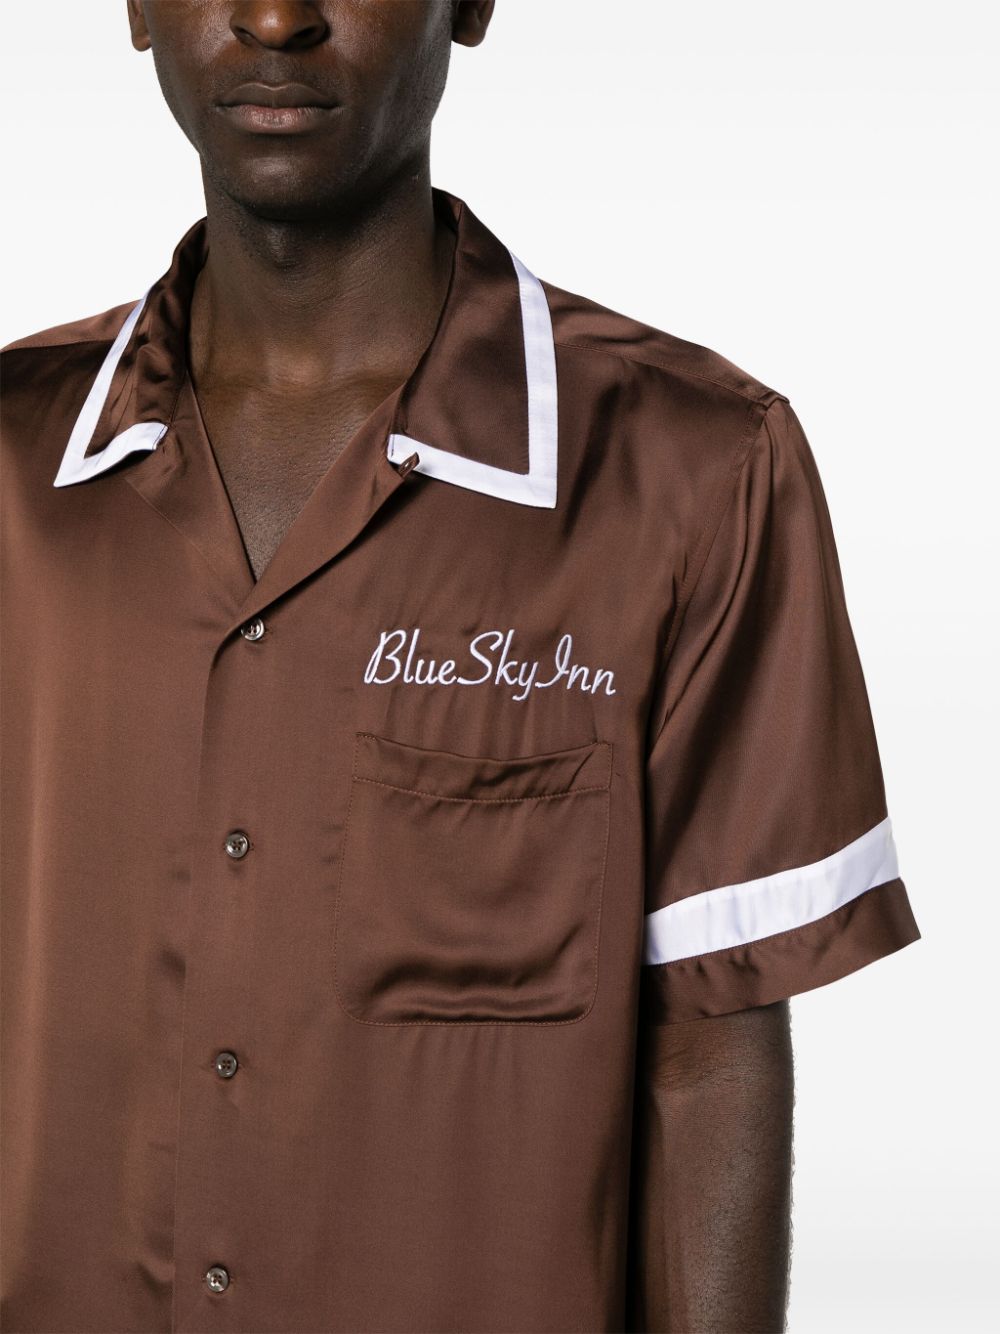 Blue Sky Inn Shirts Brown